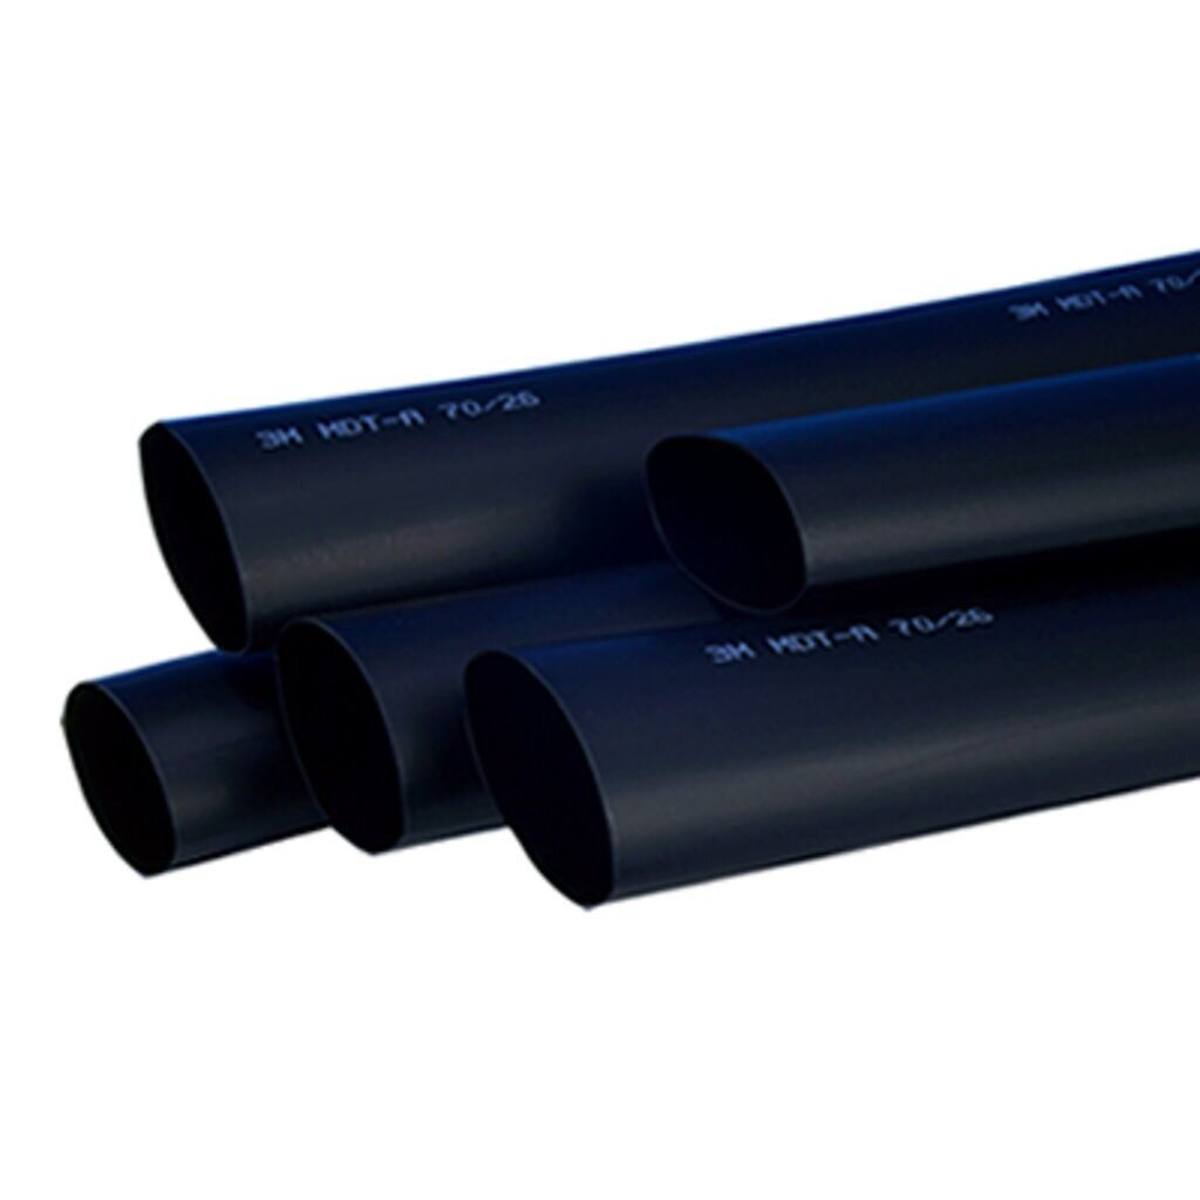 3M MDT-A Medium-wall heat-shrink tubing with adhesive, black, 12/3 mm, 1 m